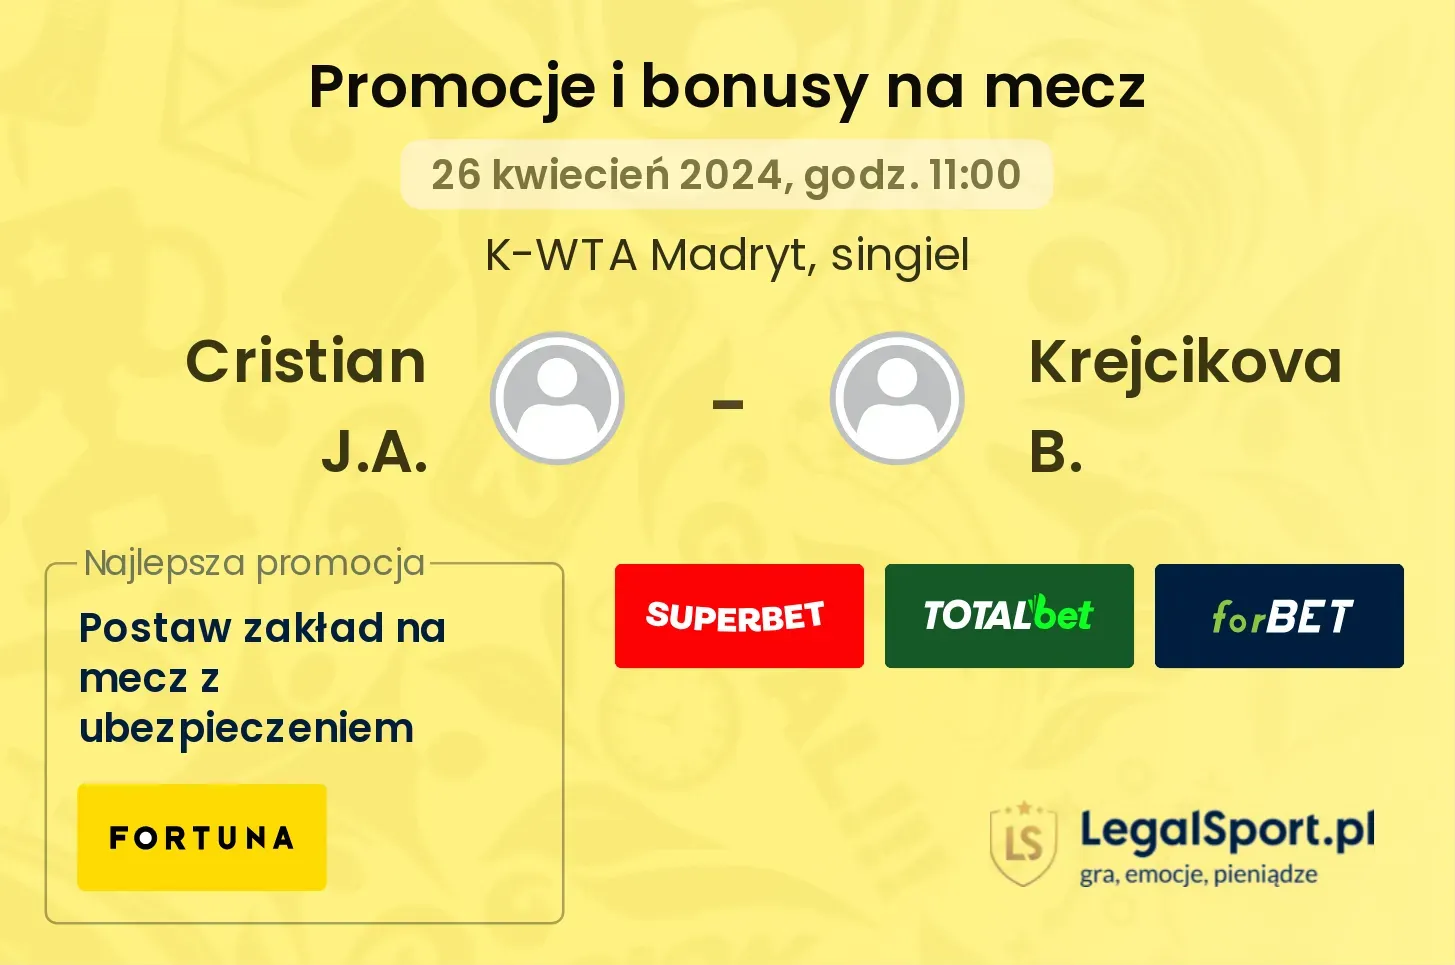 Cristian J.A. - Krejcikova B. promocje bonusy na mecz